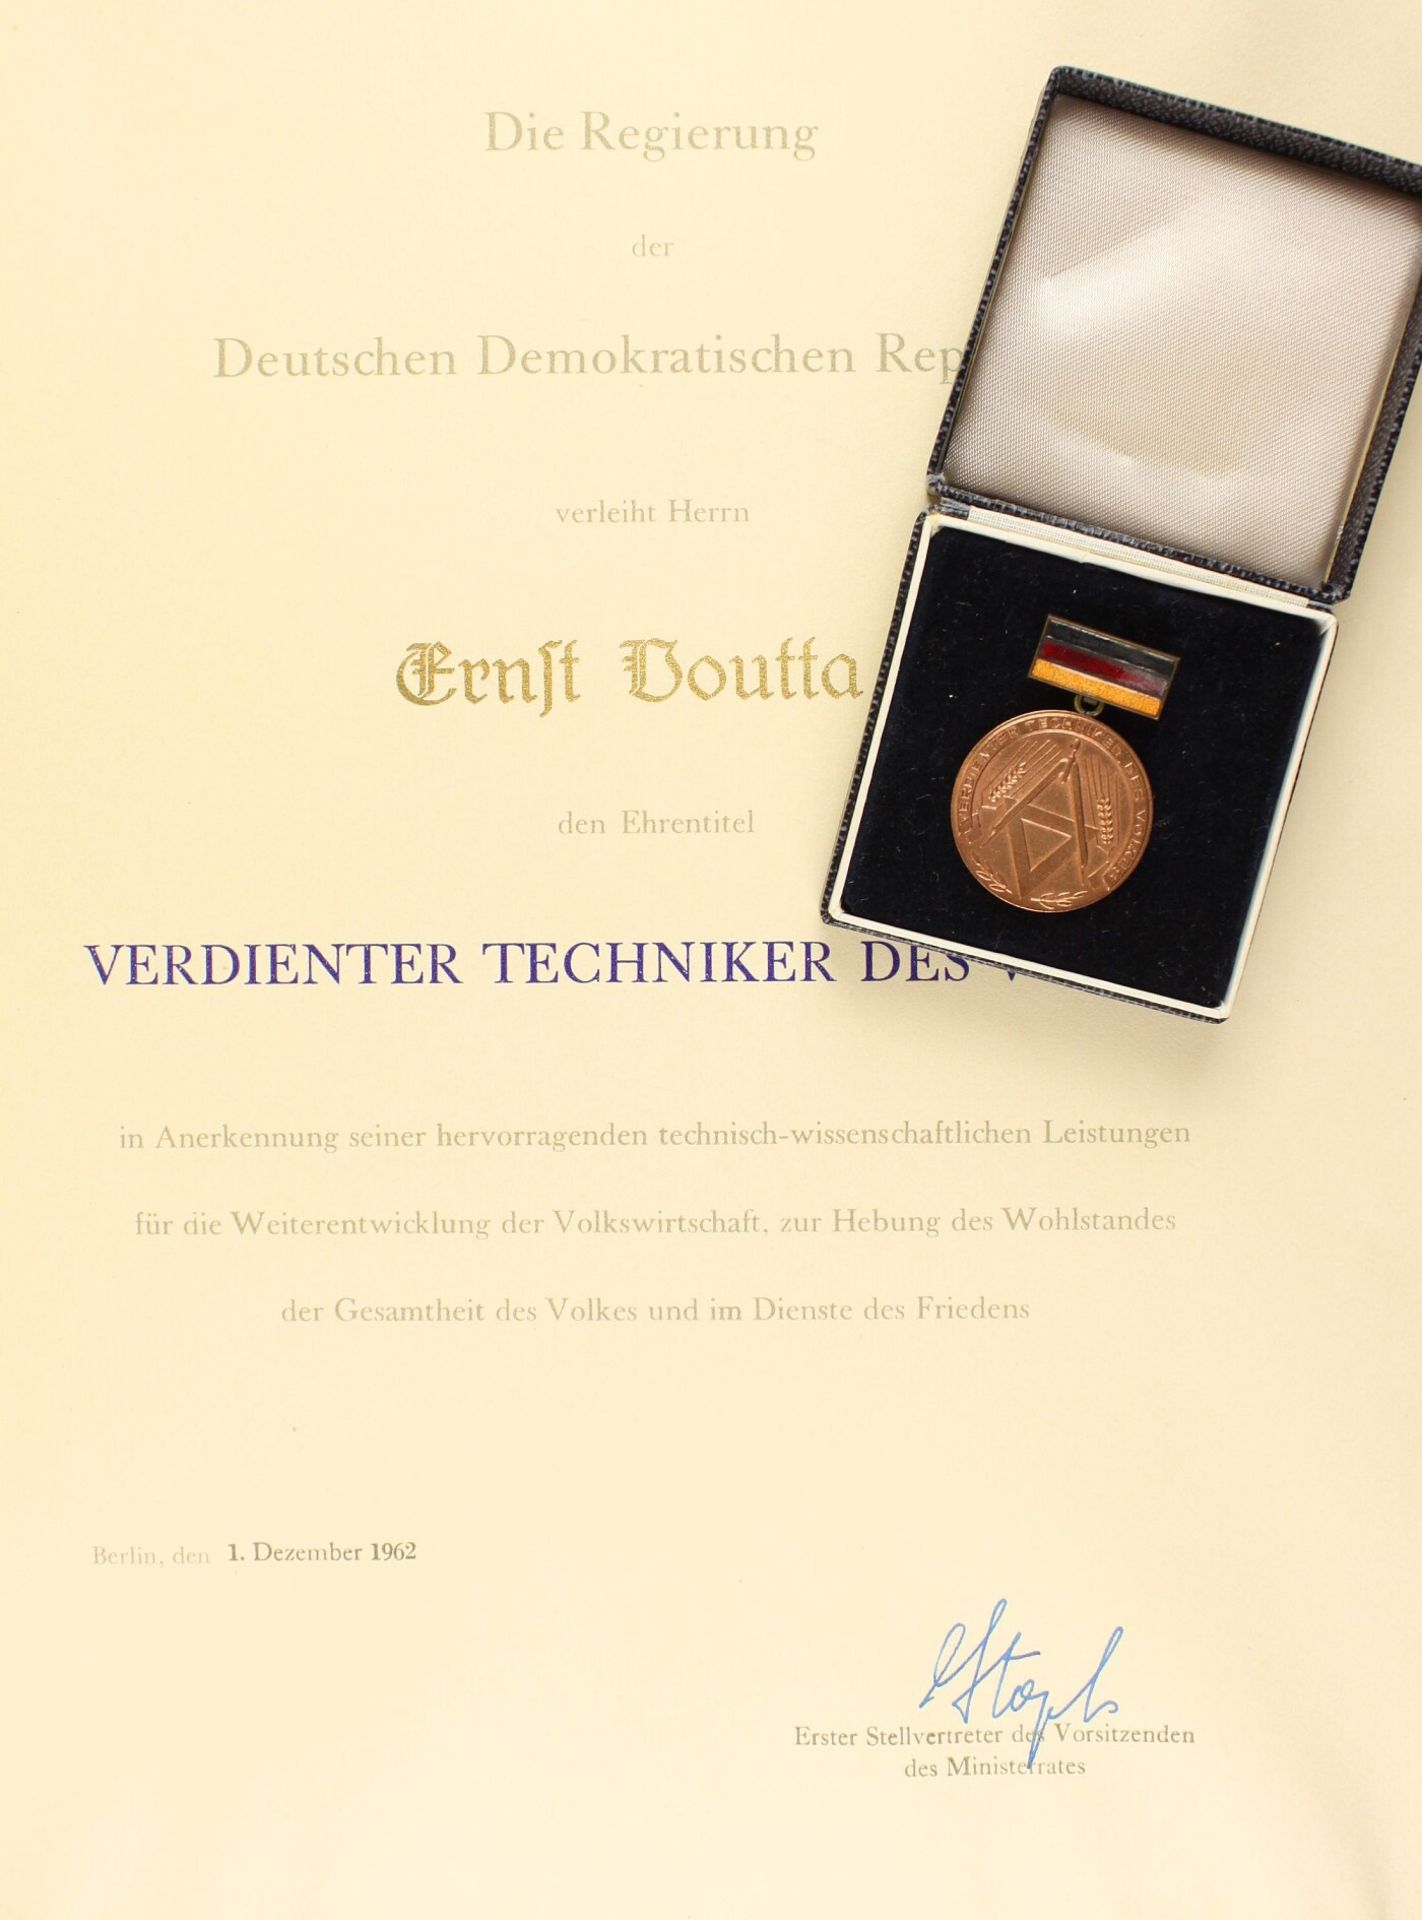 Verdienter Techniker des Volkes, - Image 2 of 5